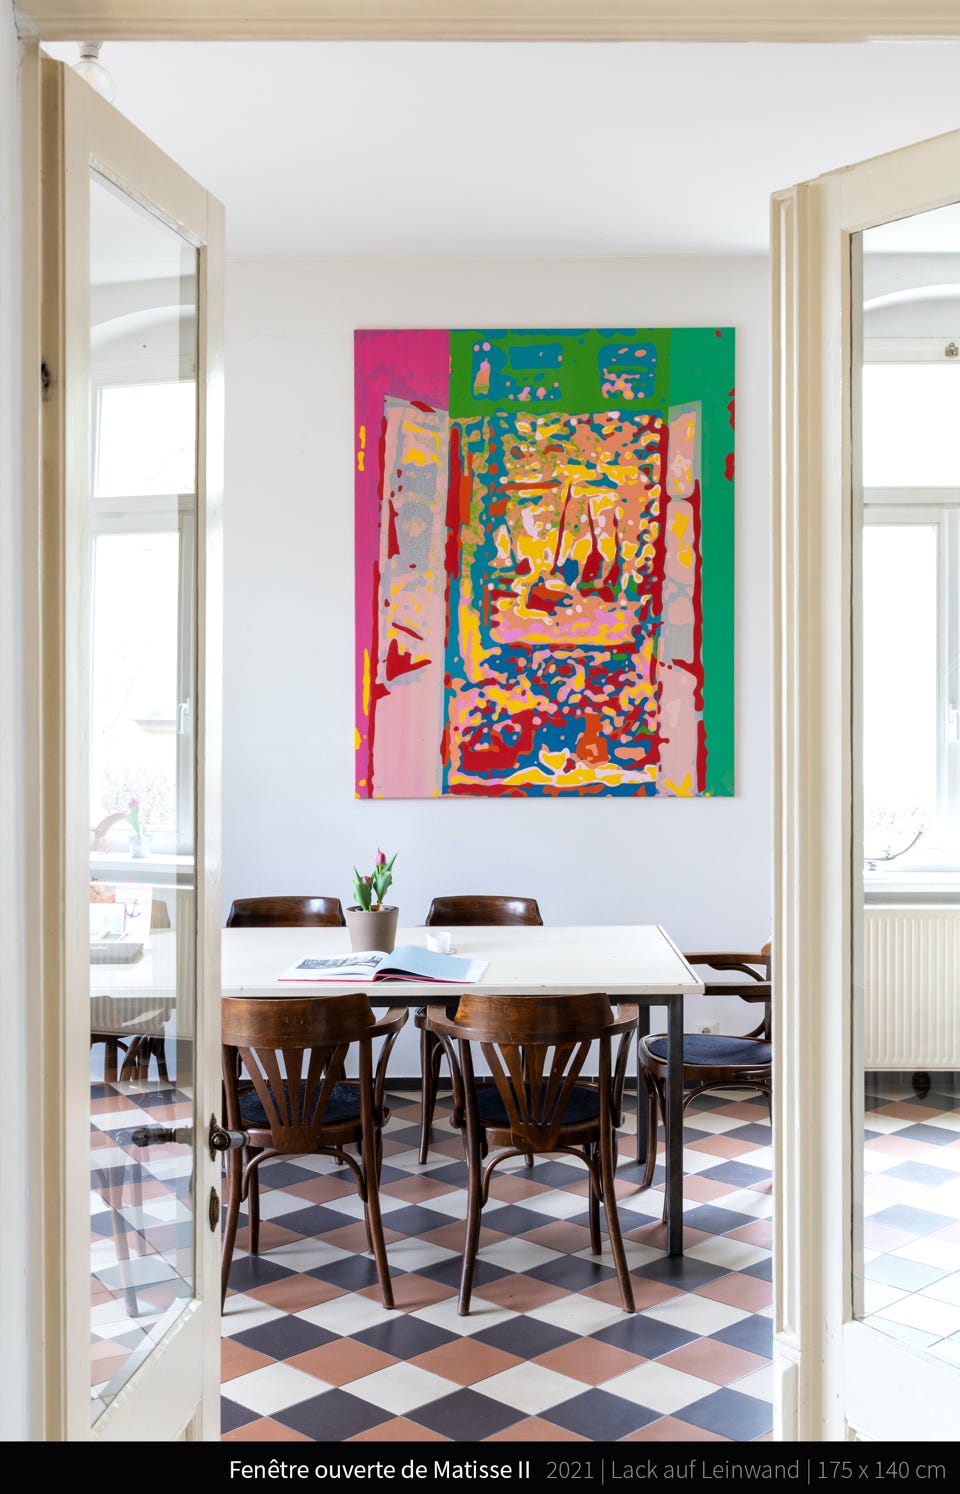 Fenêtre ouverte de Matisse II - Pictures in apartment, Pictures in flat